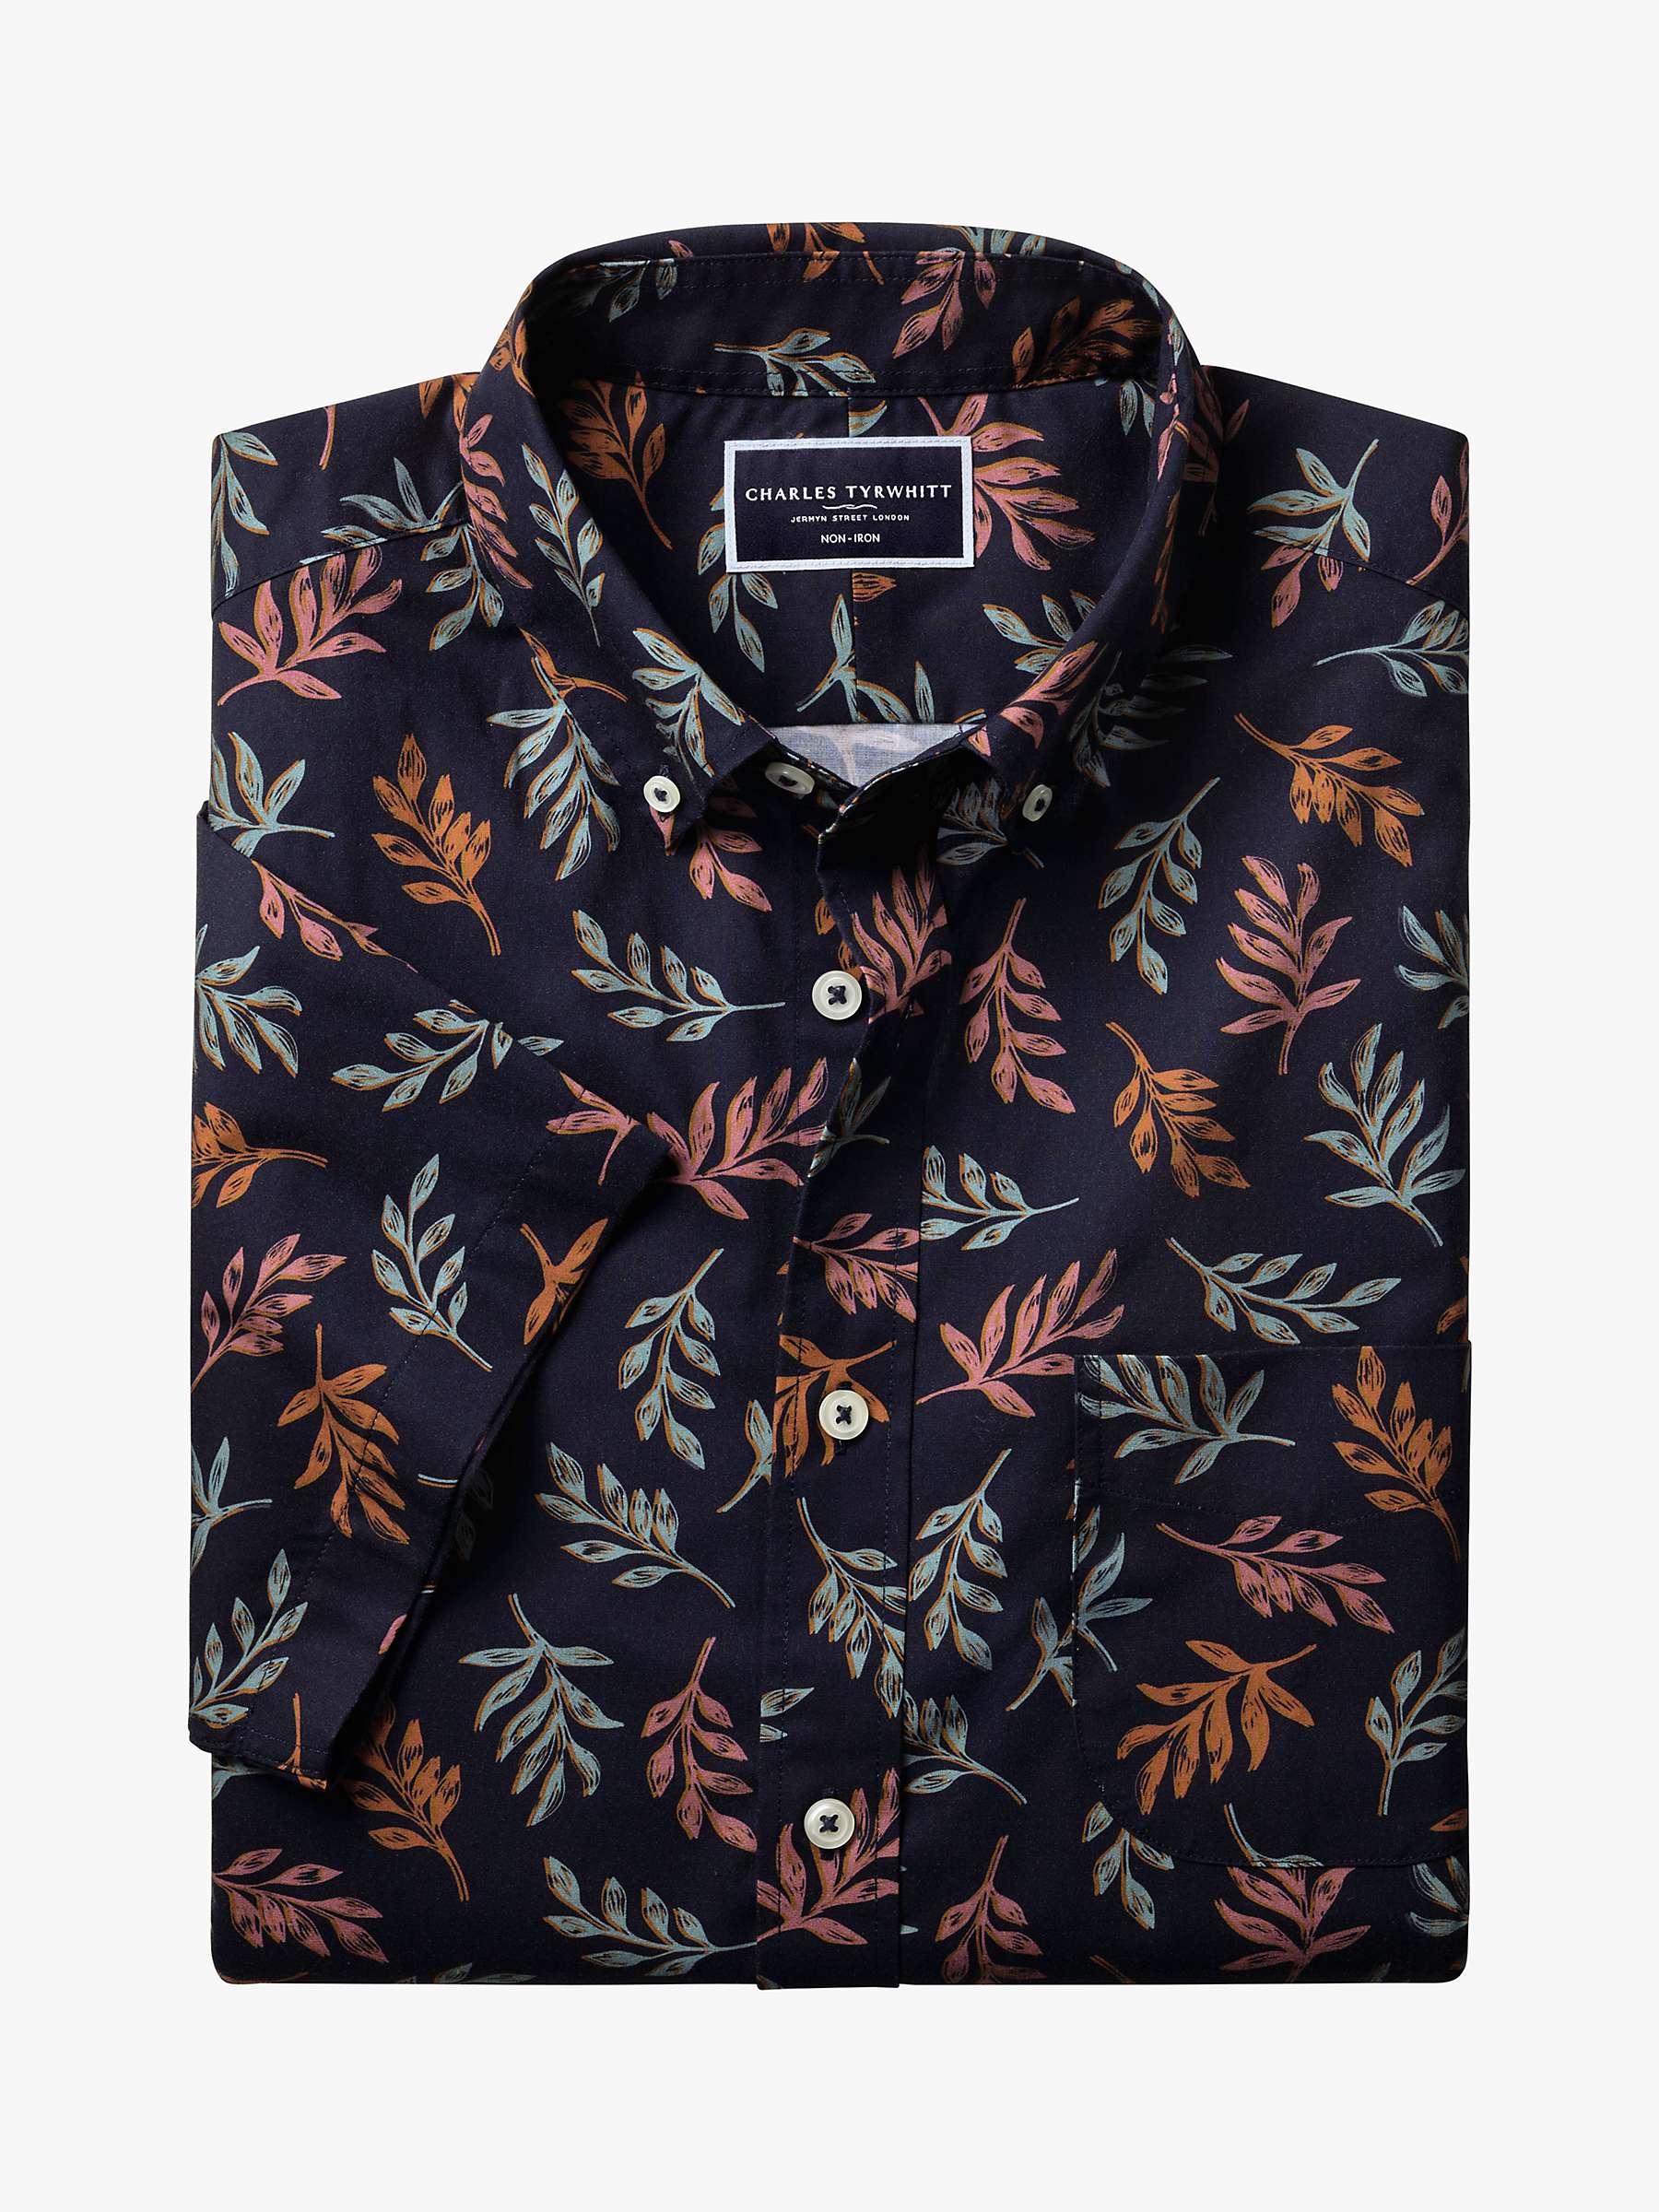 Buy Charles Tyrwhitt Slim Fit Leaf Print Non-Iron Stretch Shirt, Navy/Multi Online at johnlewis.com